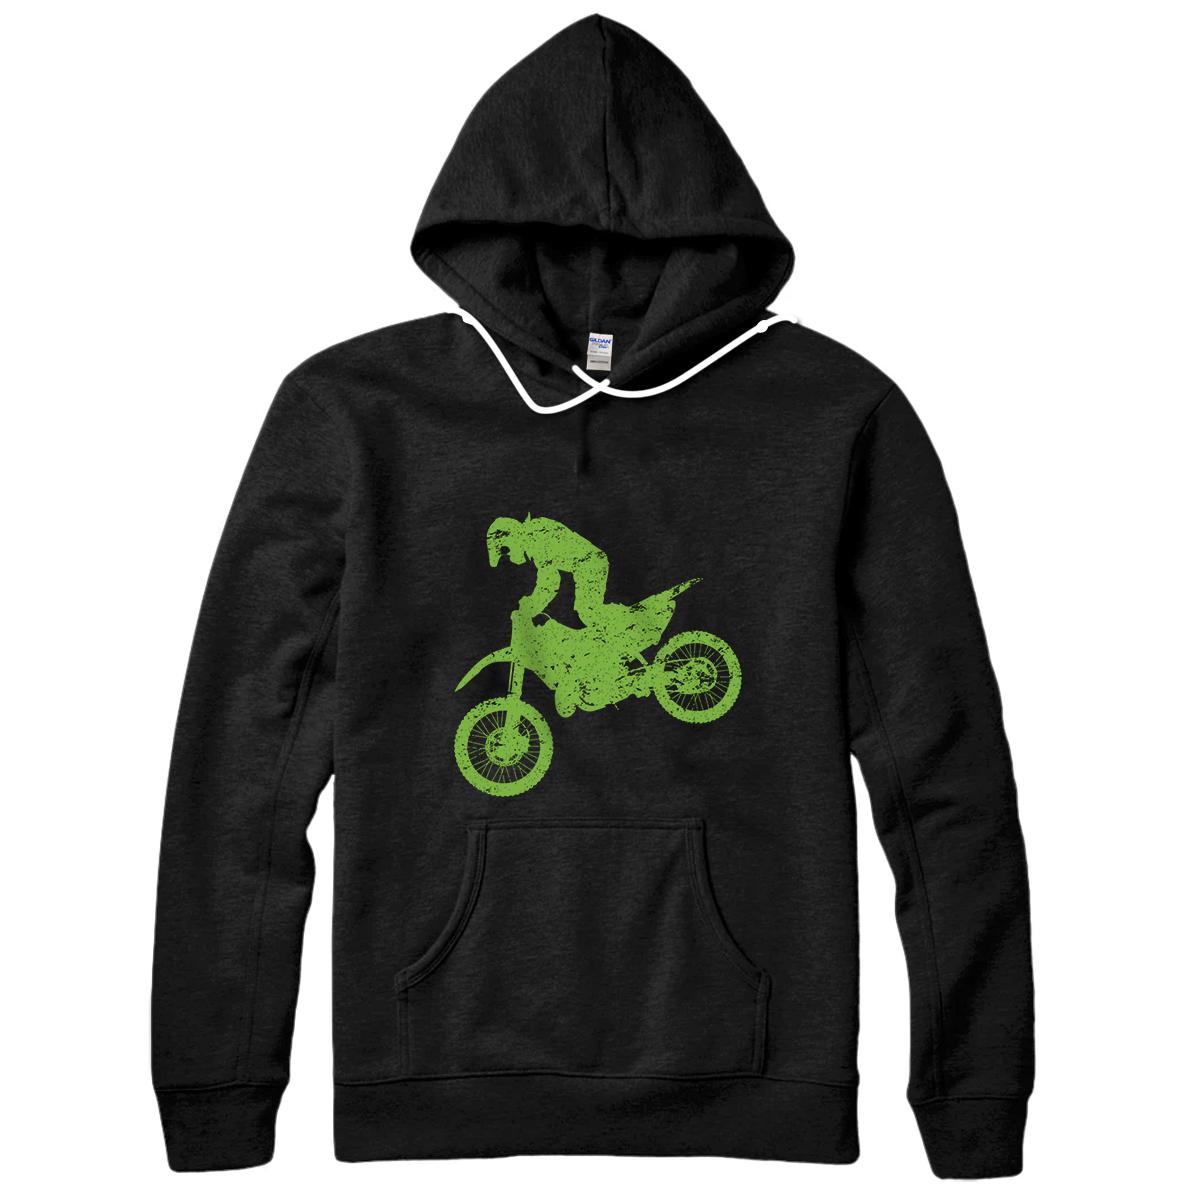 Personalized Motocross Dirt Bike Racing Shirt Motorcycle Gift Boys Men Pullover Hoodie